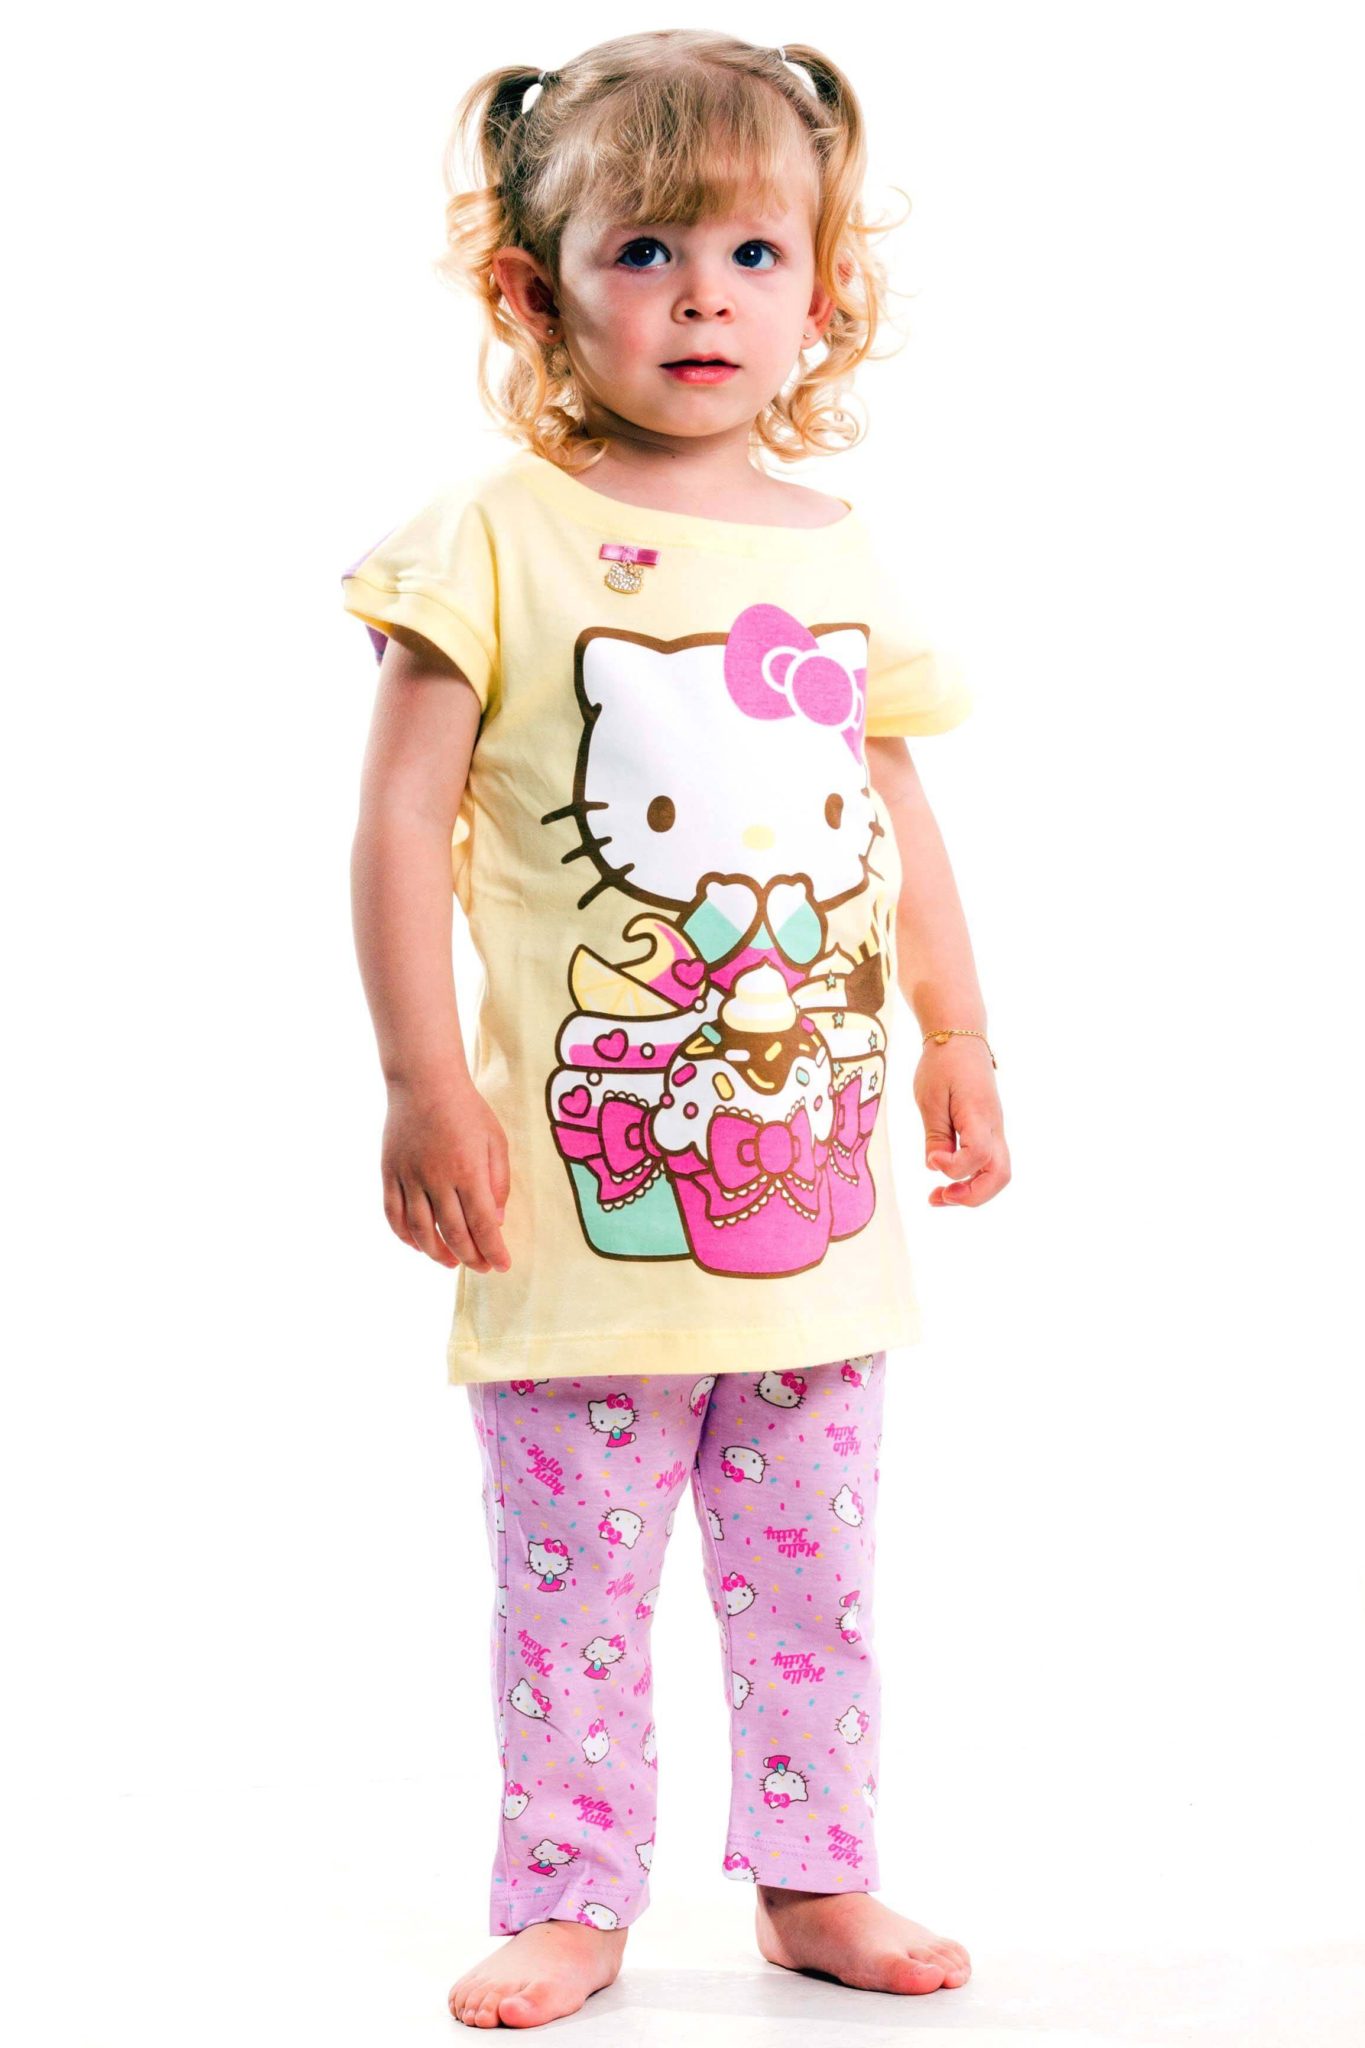 Pijama infantil Capri Kids com estampa da Hello Kitty da loja virtual Pijamas for you